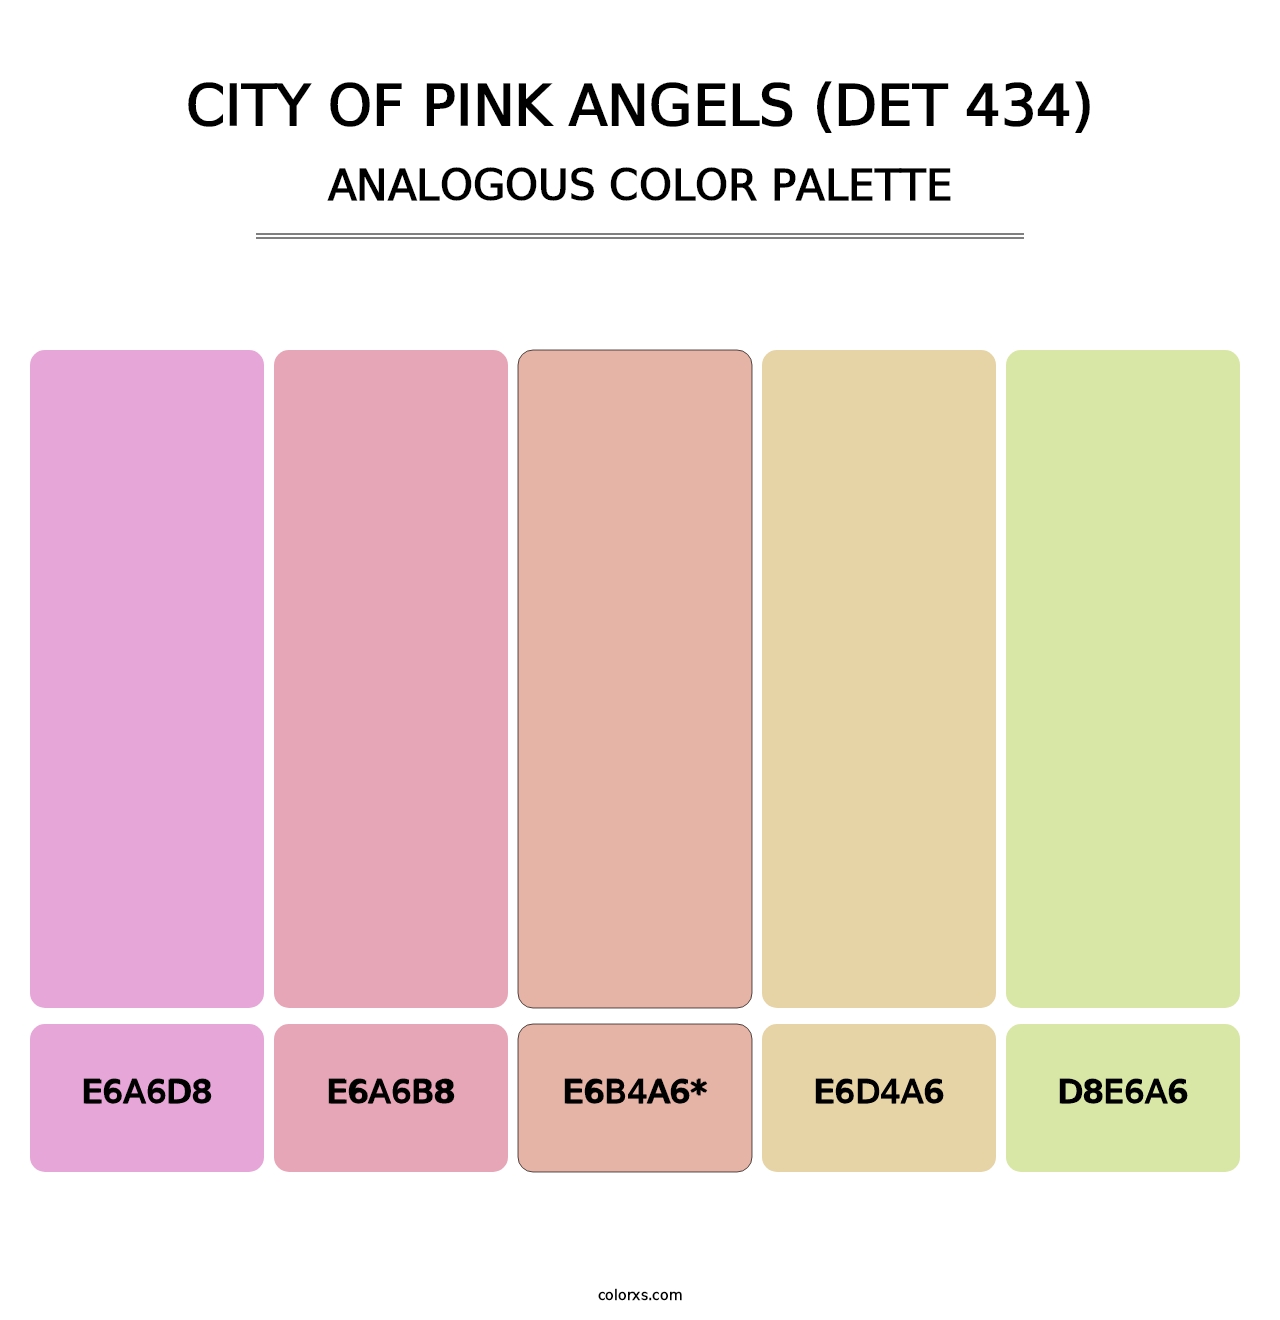 City of Pink Angels (DET 434) - Analogous Color Palette